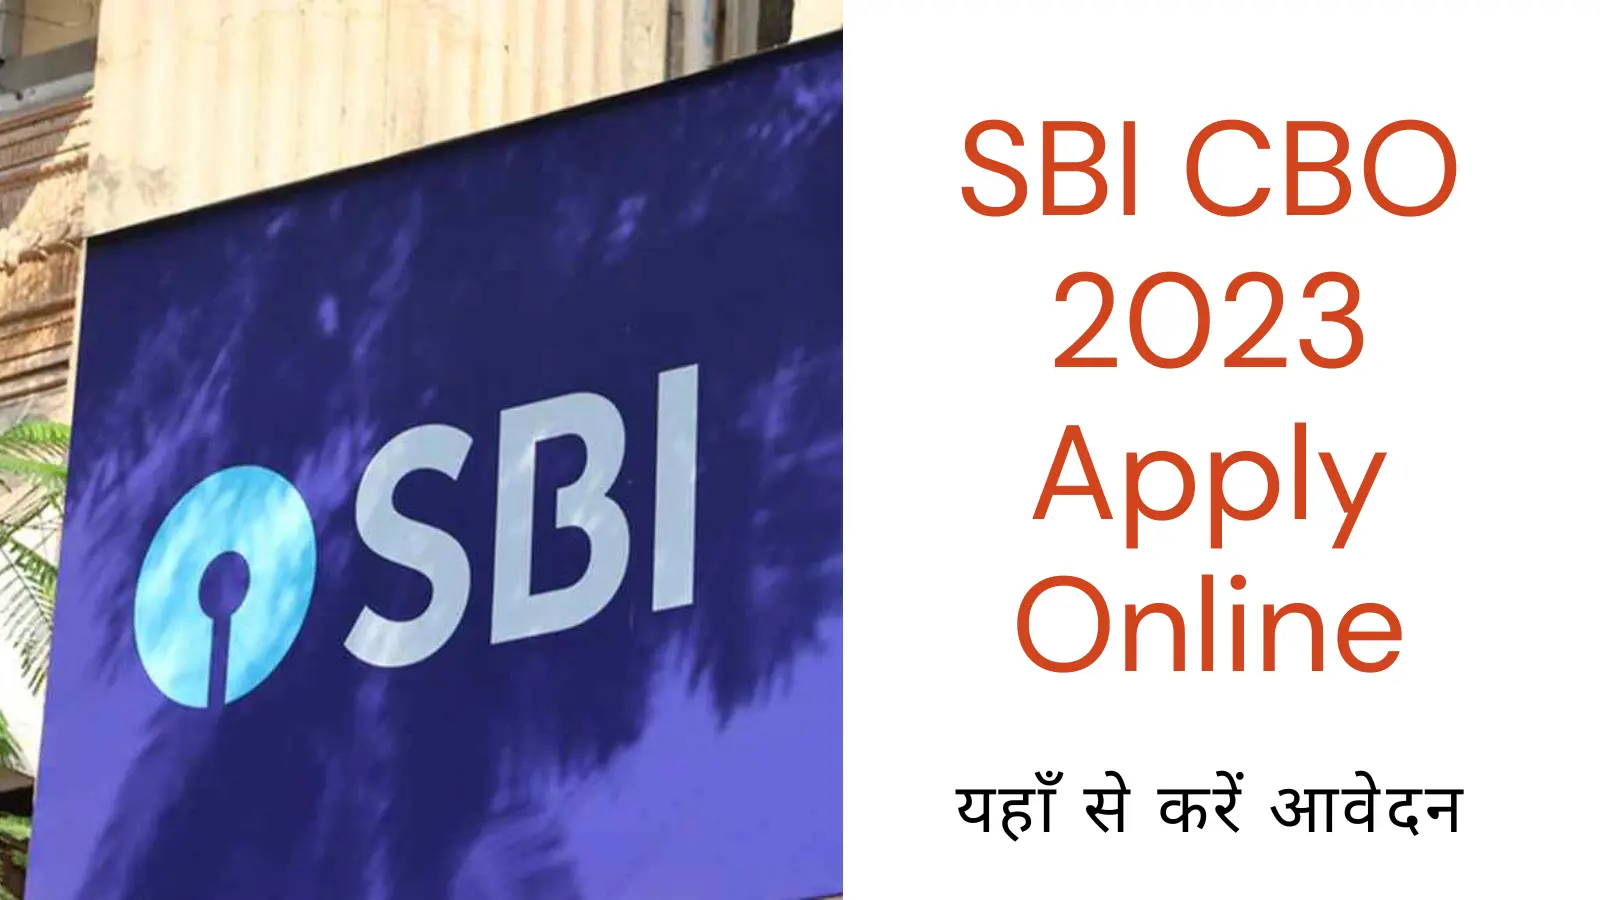 SBI CBO Apply Online 2023